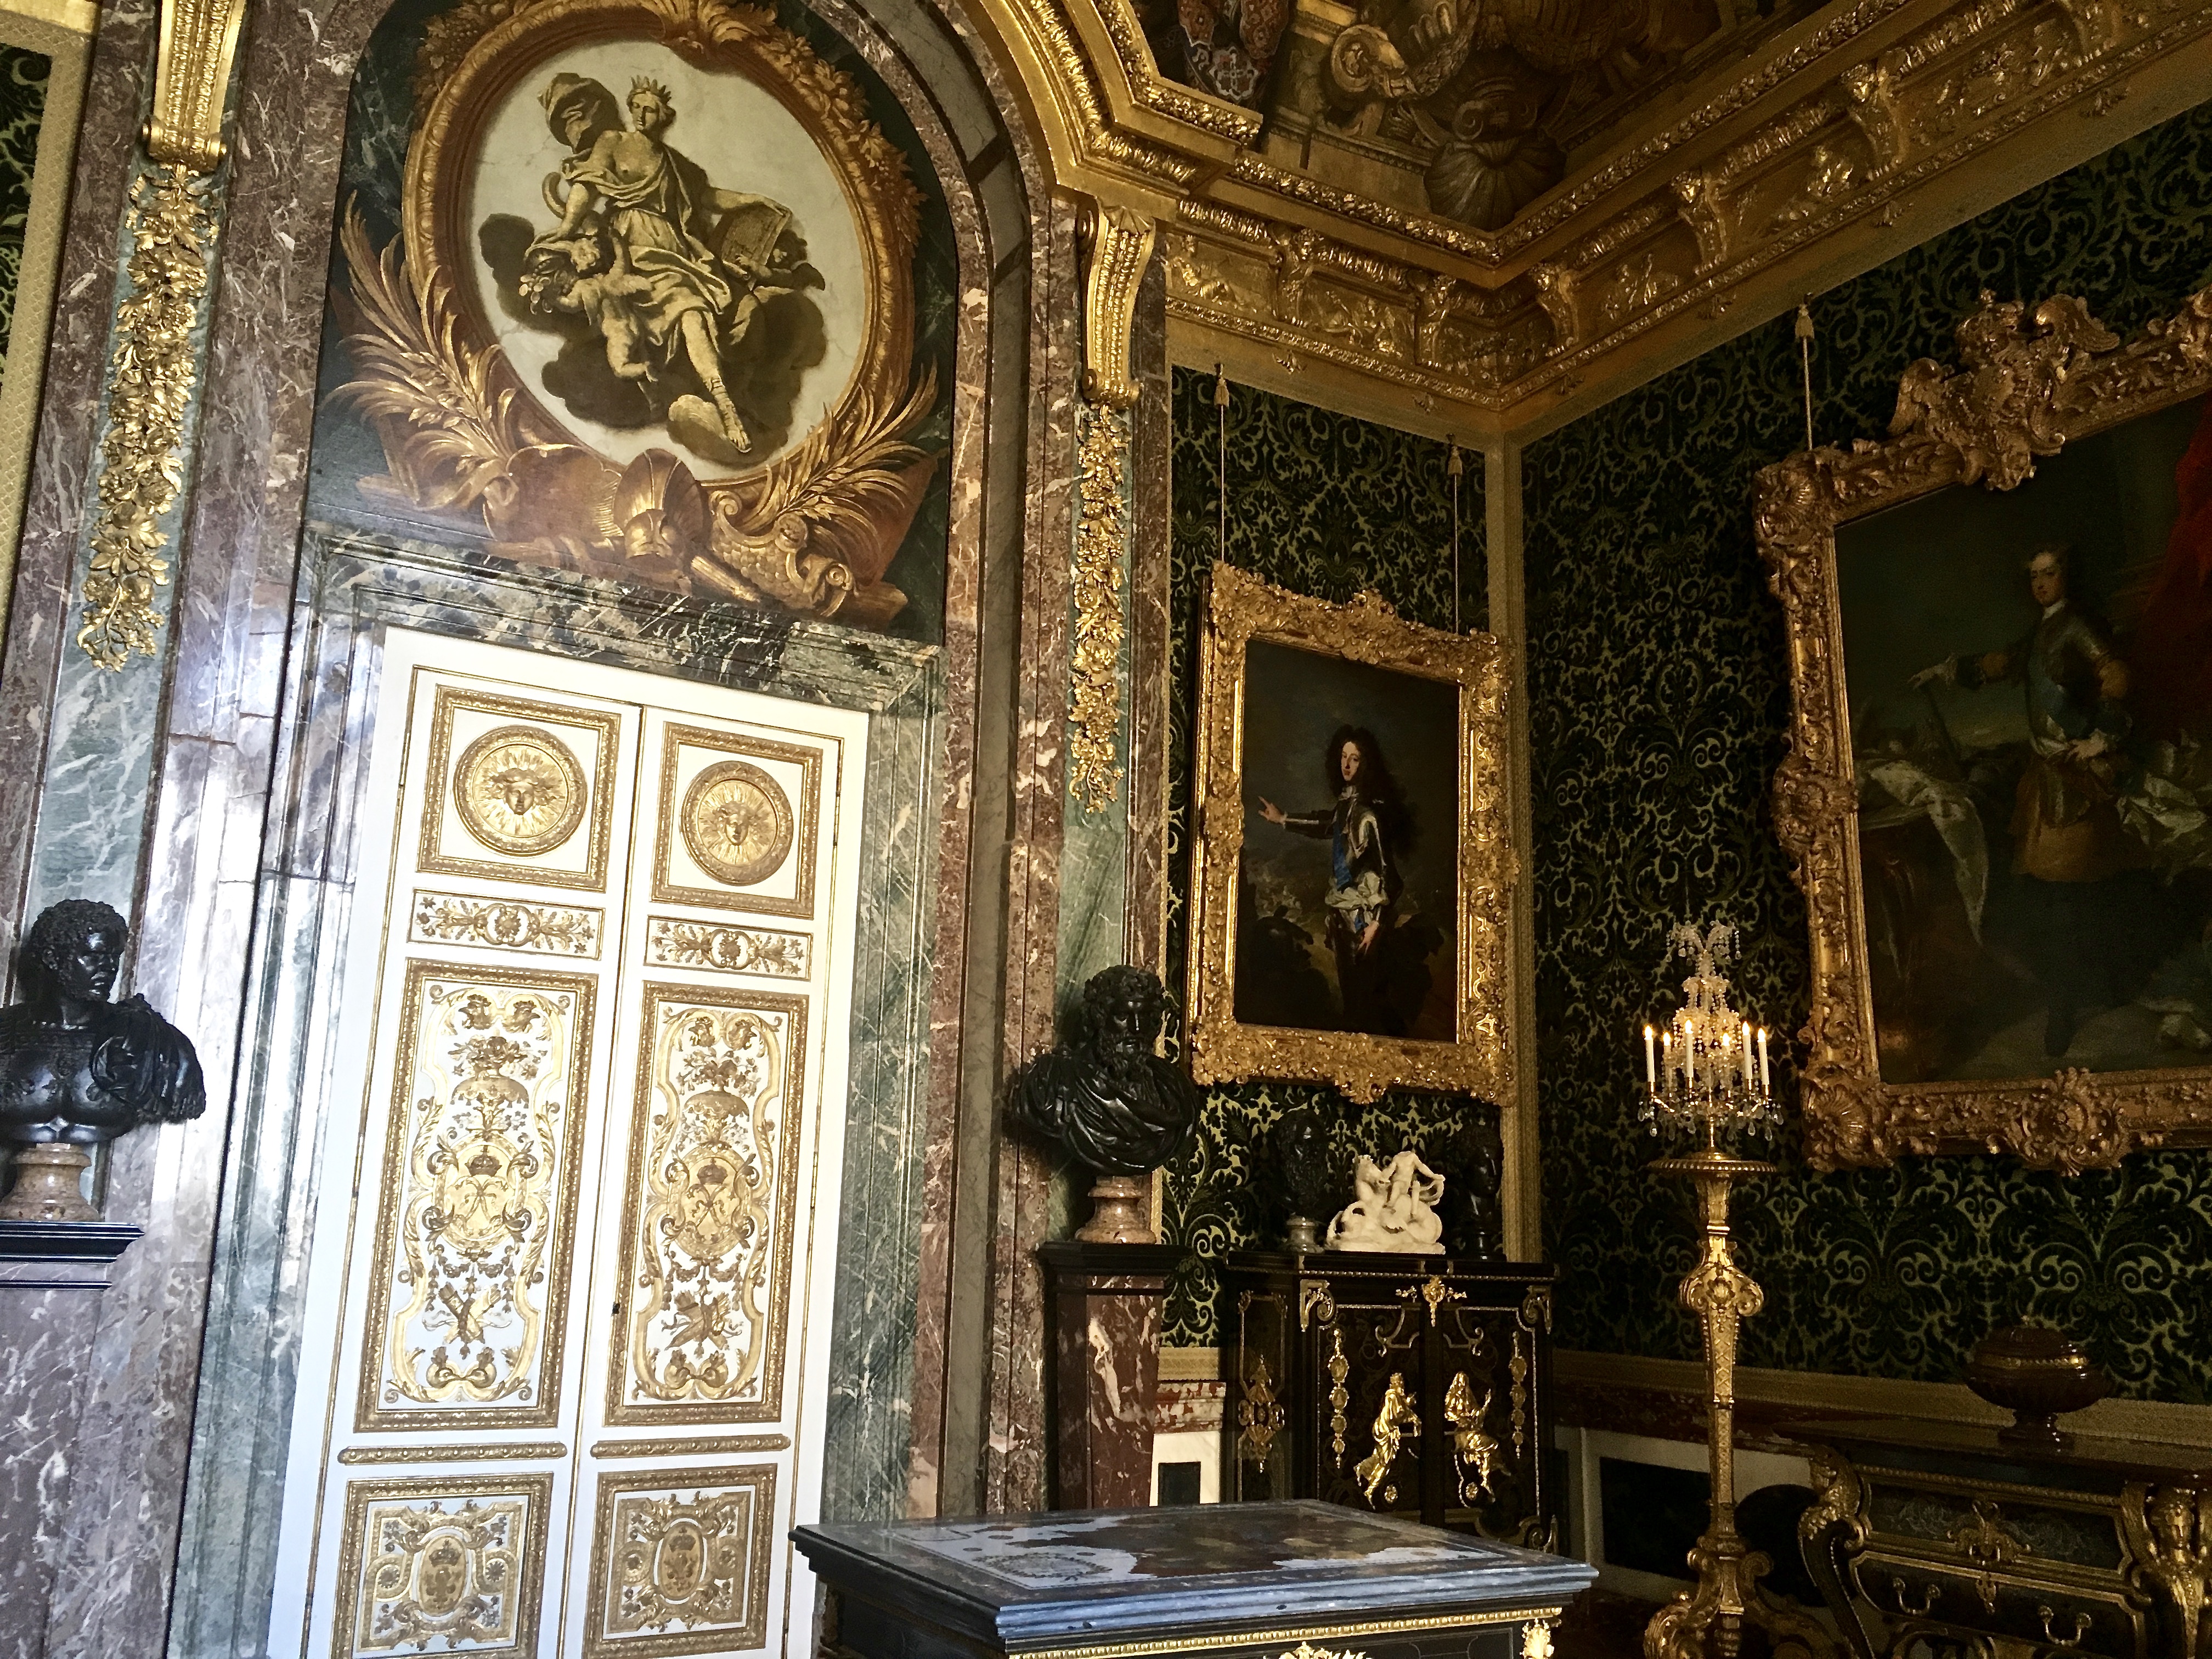 Palace of Versailles 